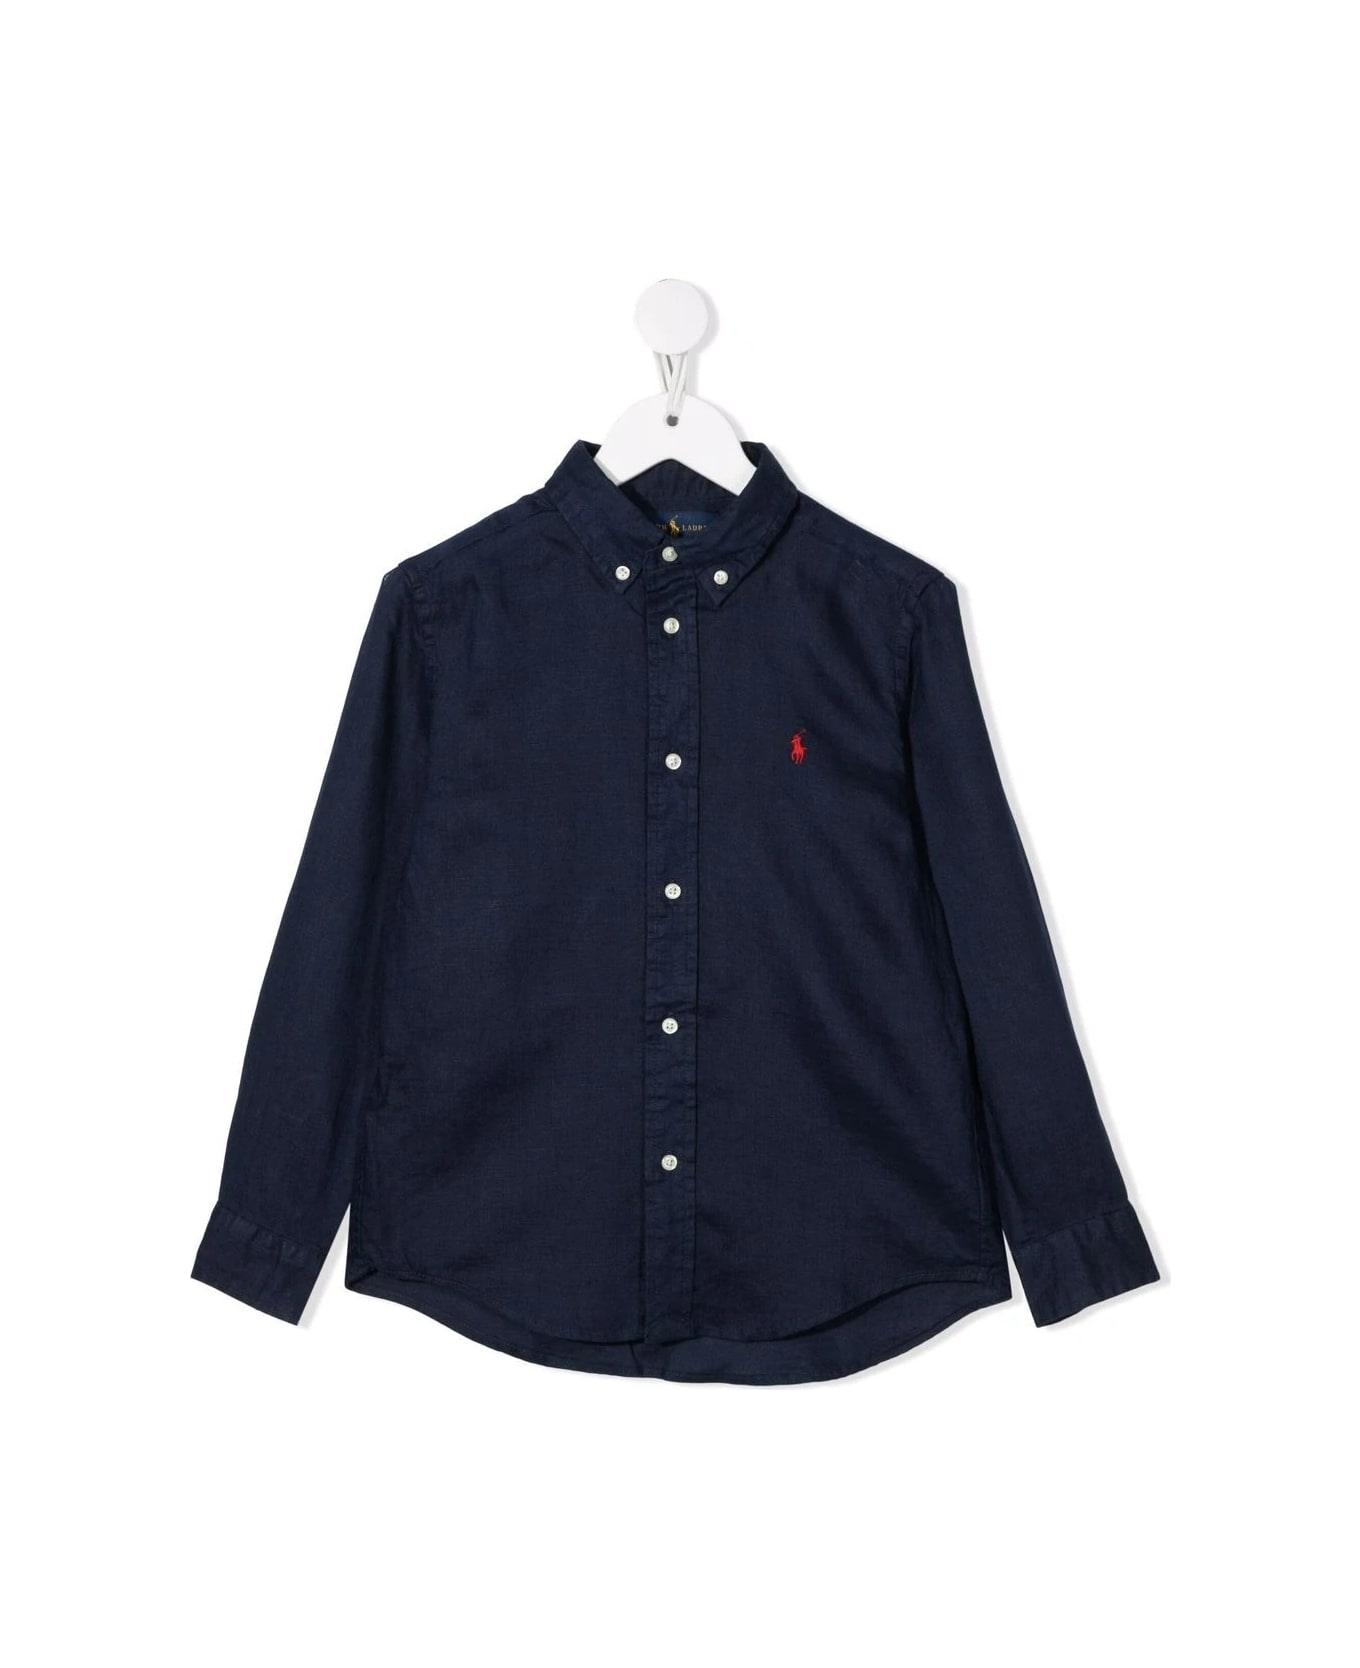 Ralph Lauren Navy Blue Linen Shirt With Embroidered Pony - Blue